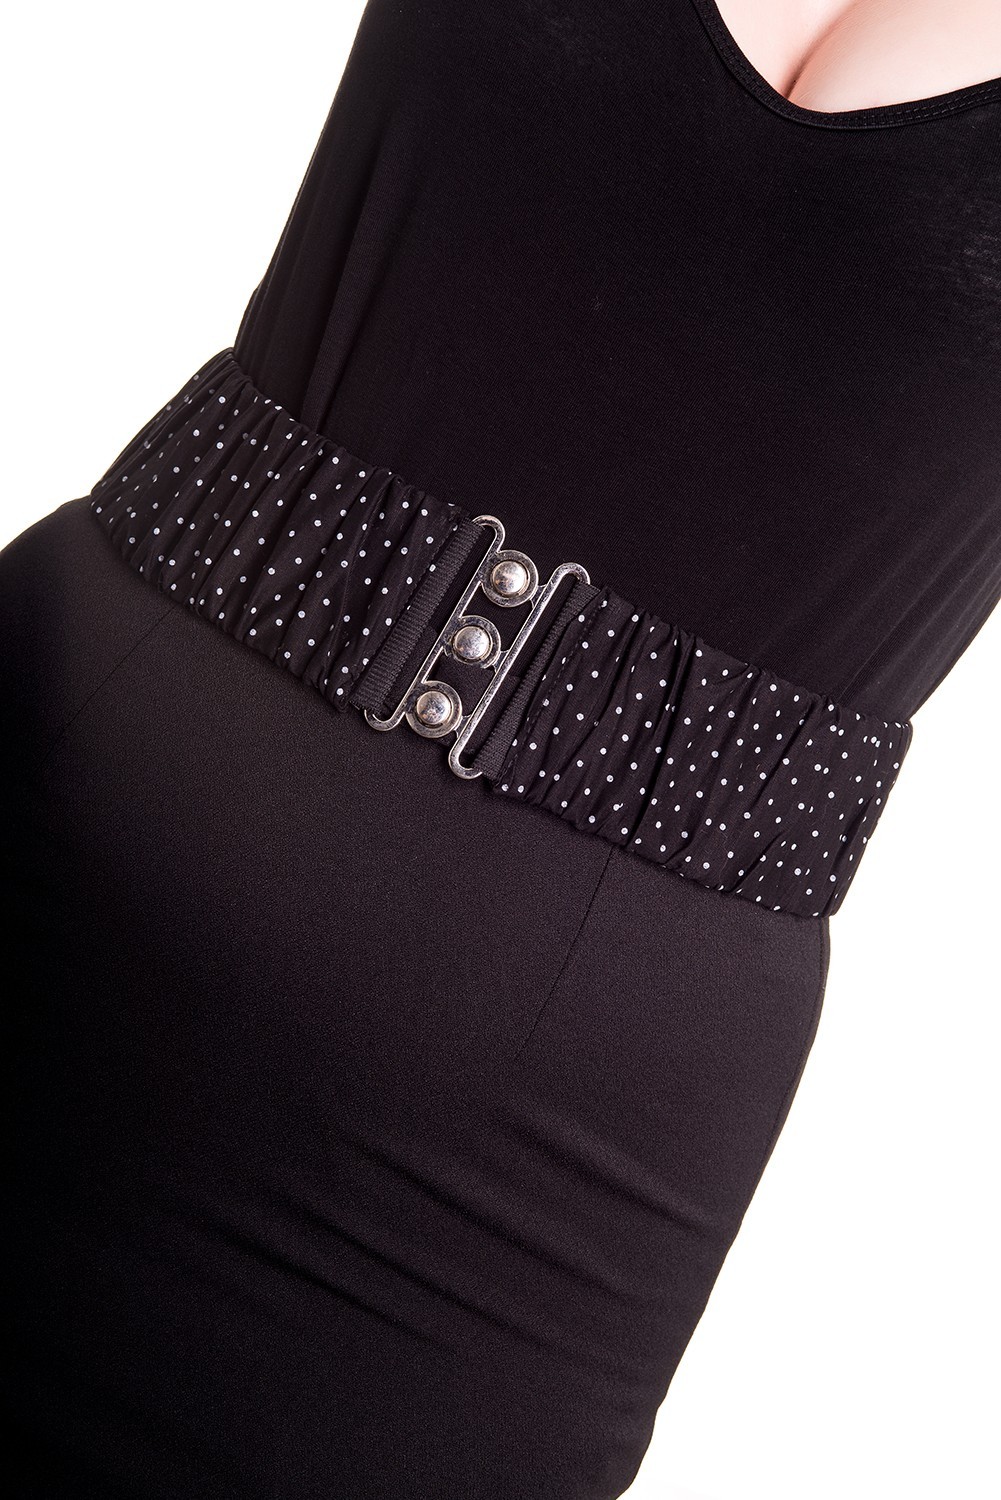 Black Dotti XLarge Hell Bunny Retro Elasticated Belts Plus Size Rockabilly Vintage Retro